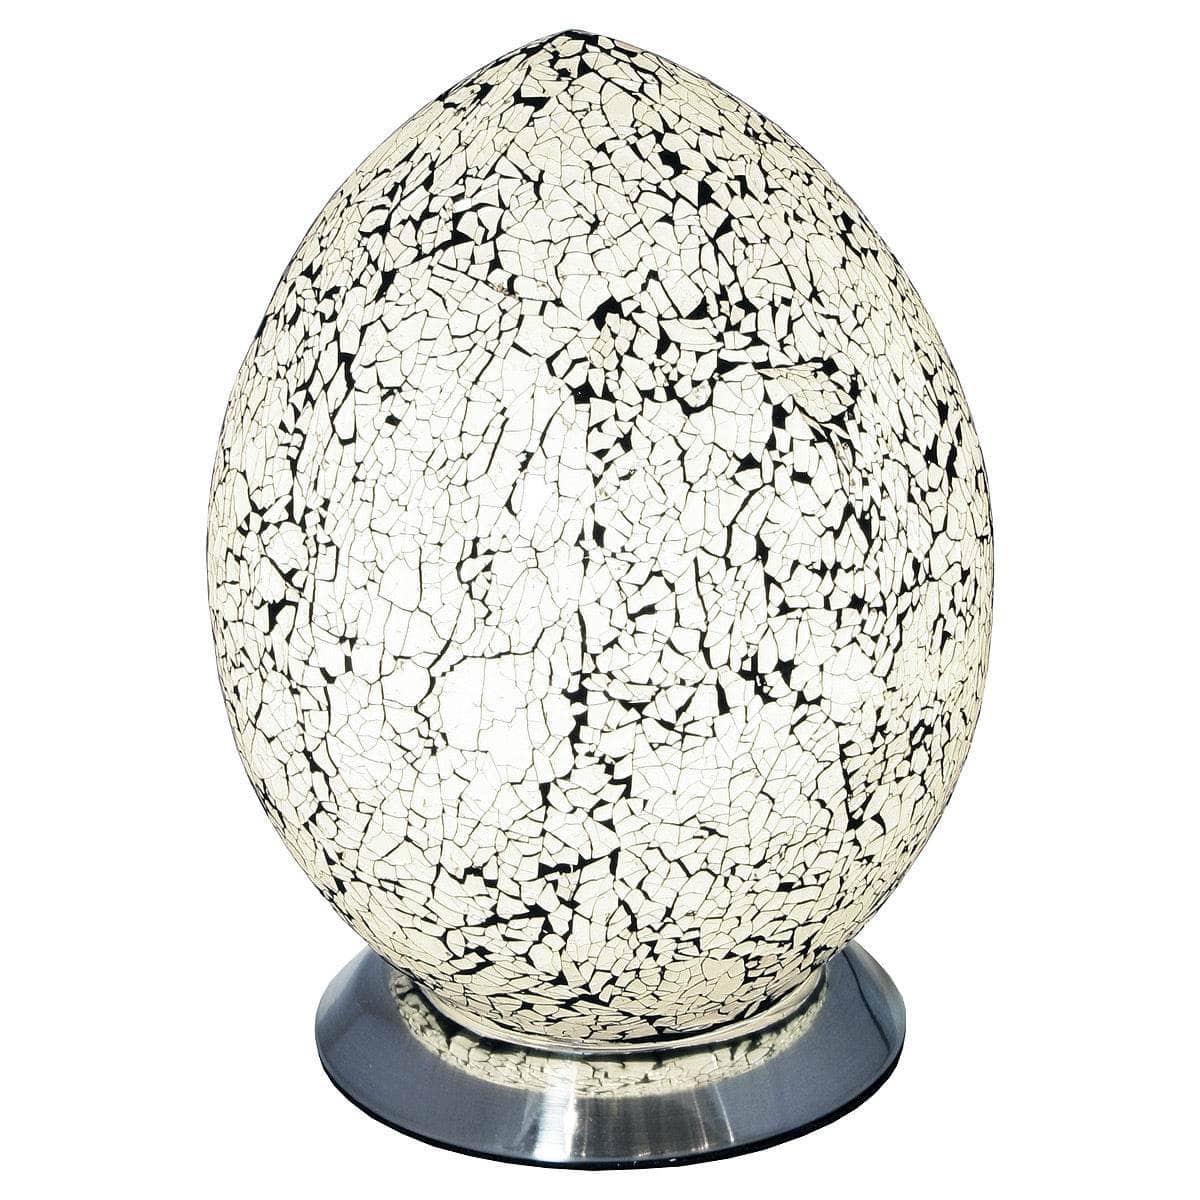 Homeware  -  Medium Mosaic Glass Egg Lamp – White  -  50153431